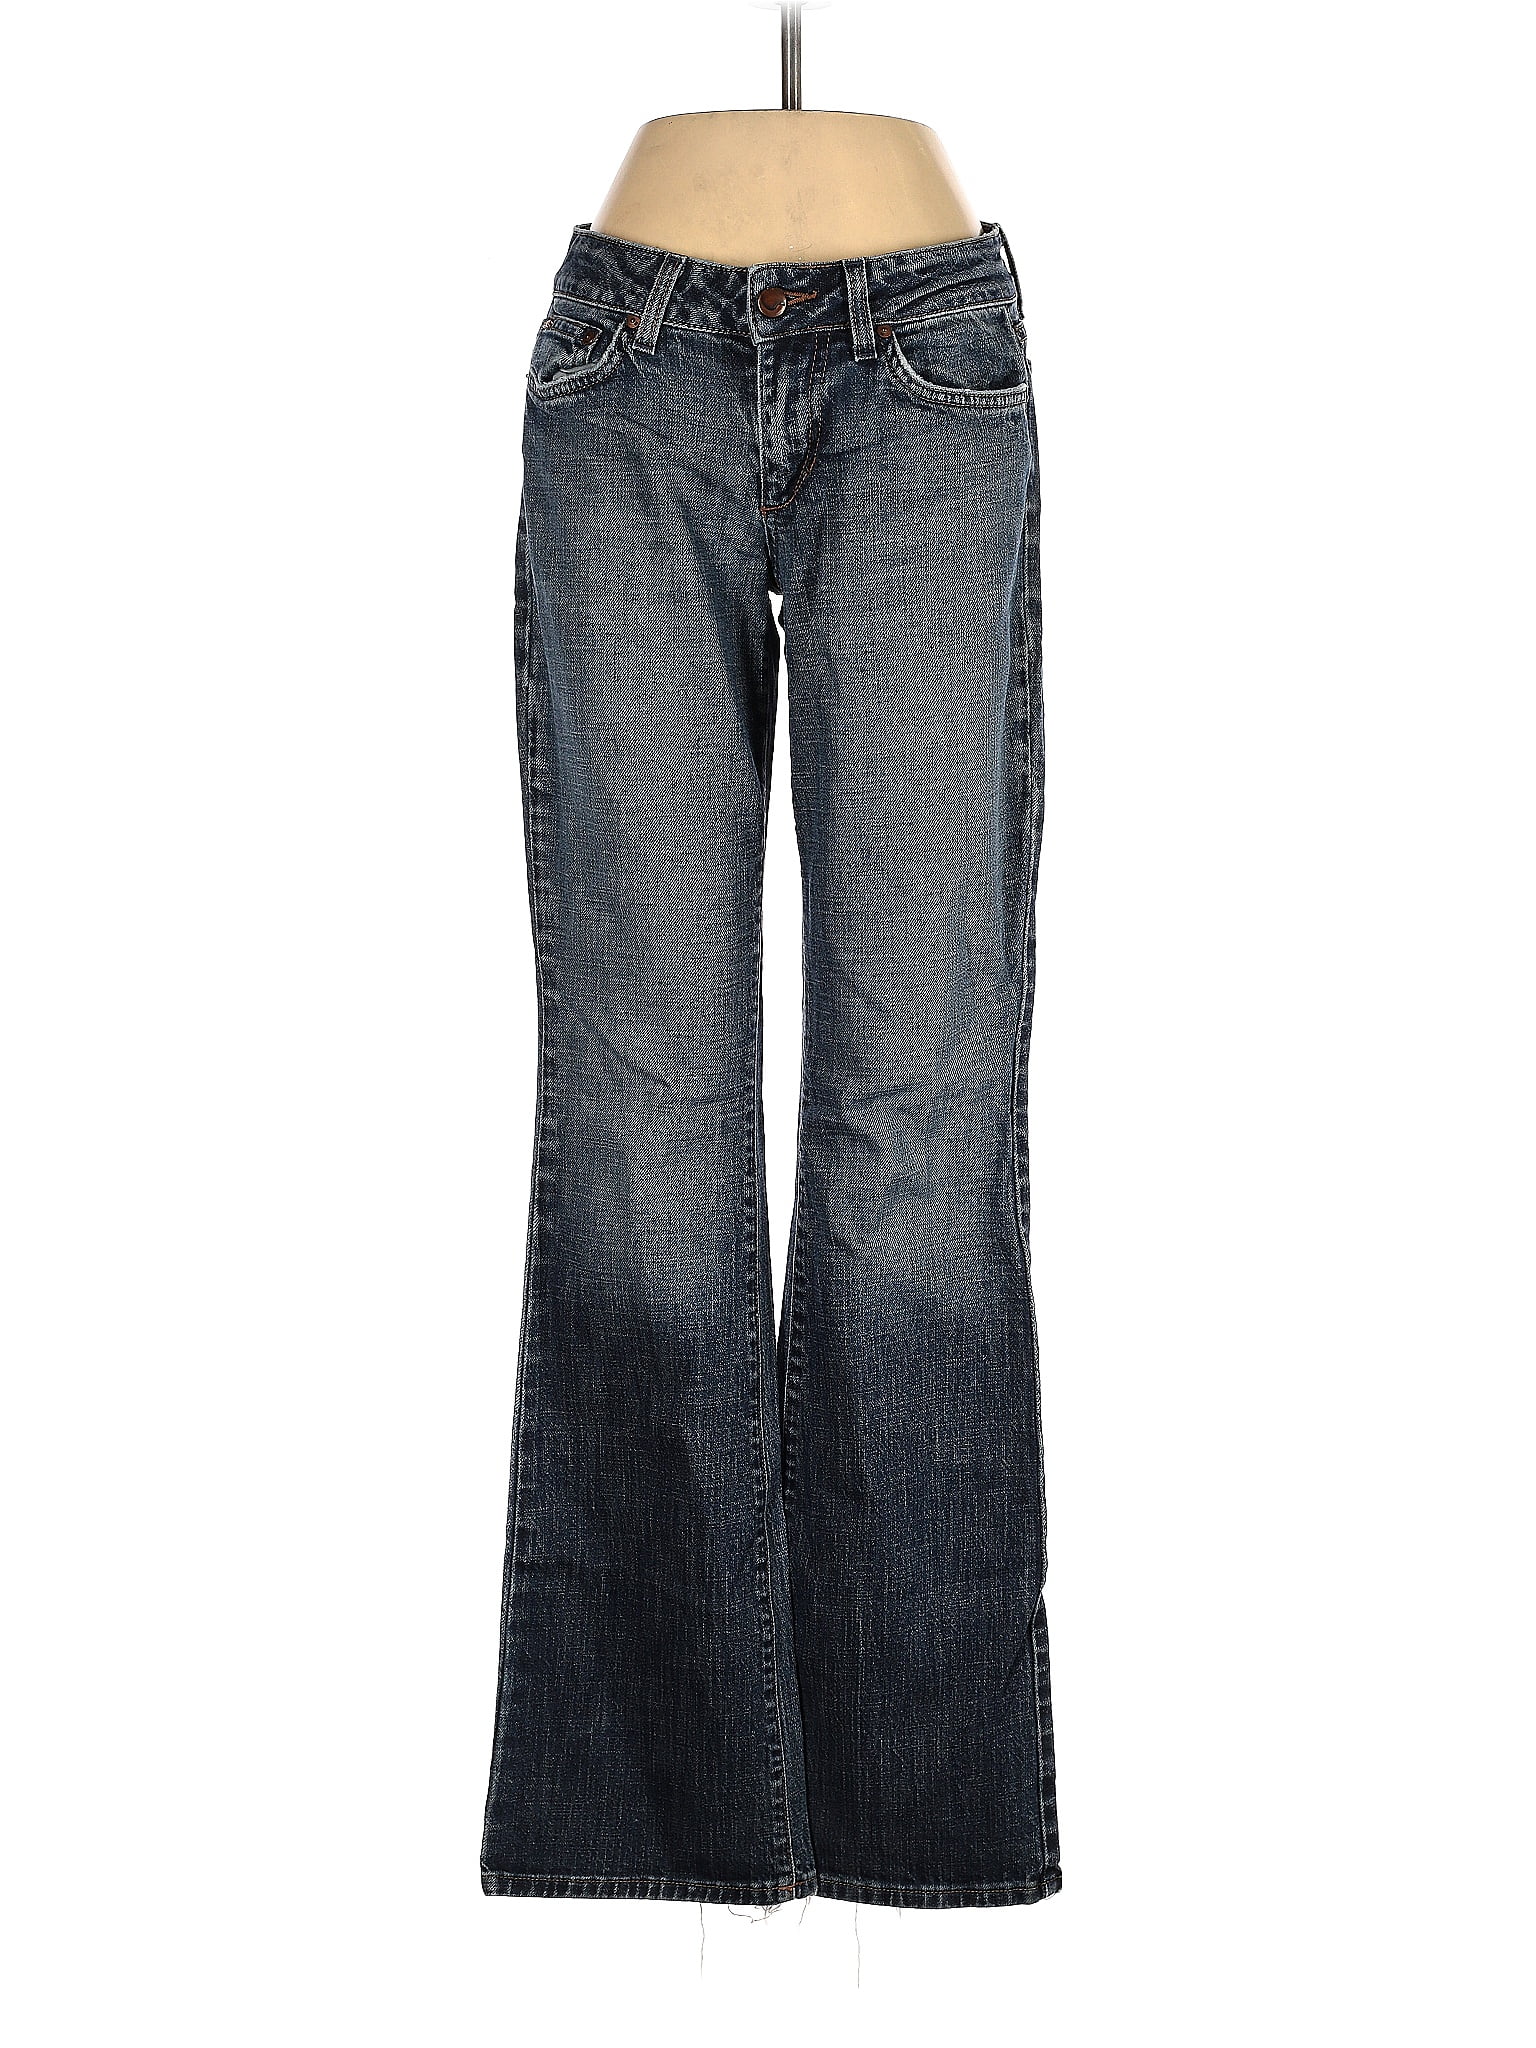 Joe's Jeans Solid Blue Jeans 26 Waist - 78% off | ThredUp